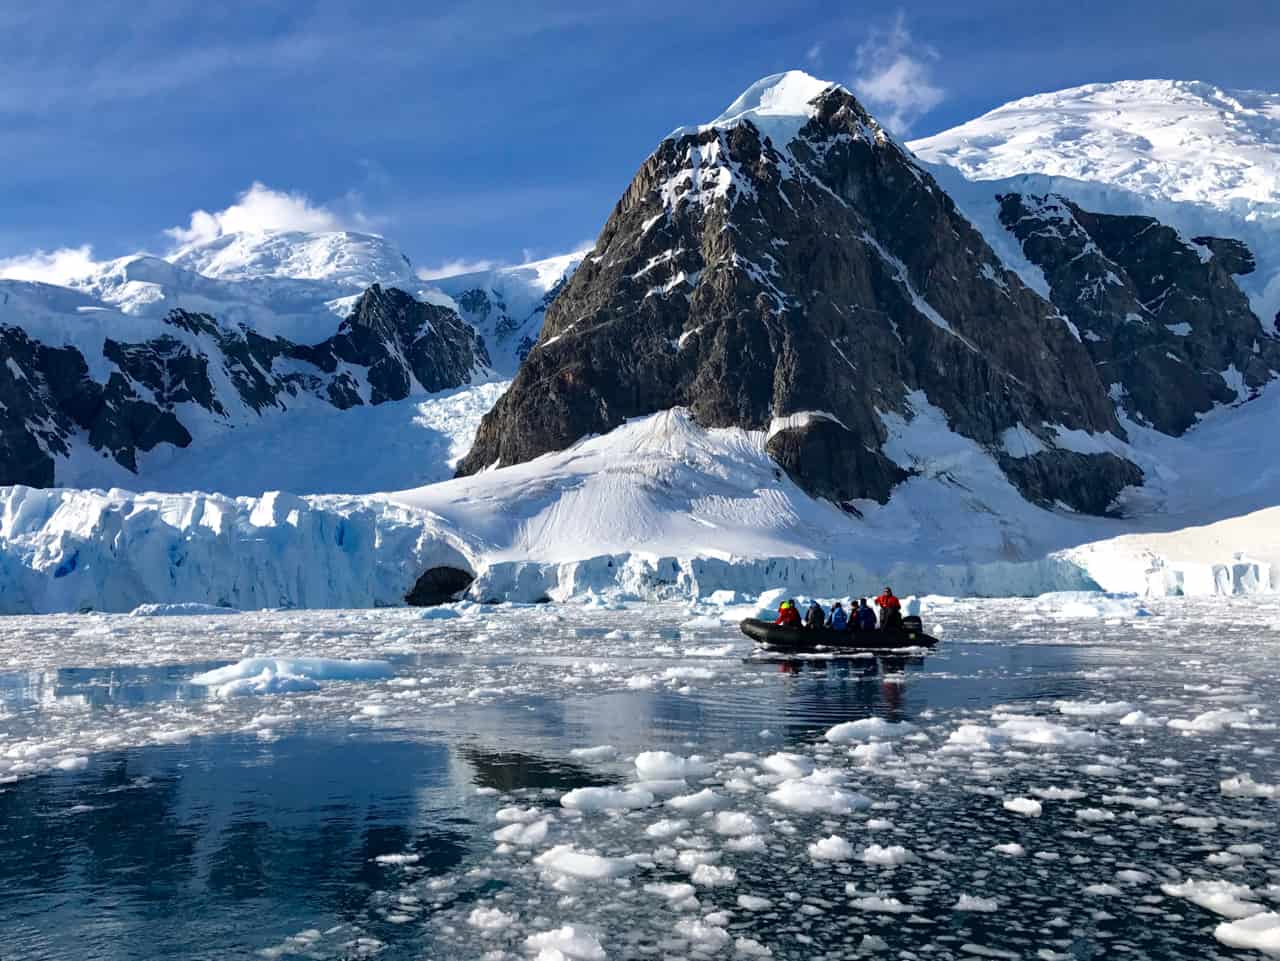 A zodiac cruises through slushy Paradise Bay towards an epic glacier in one of our favourite photos of Antarctica.